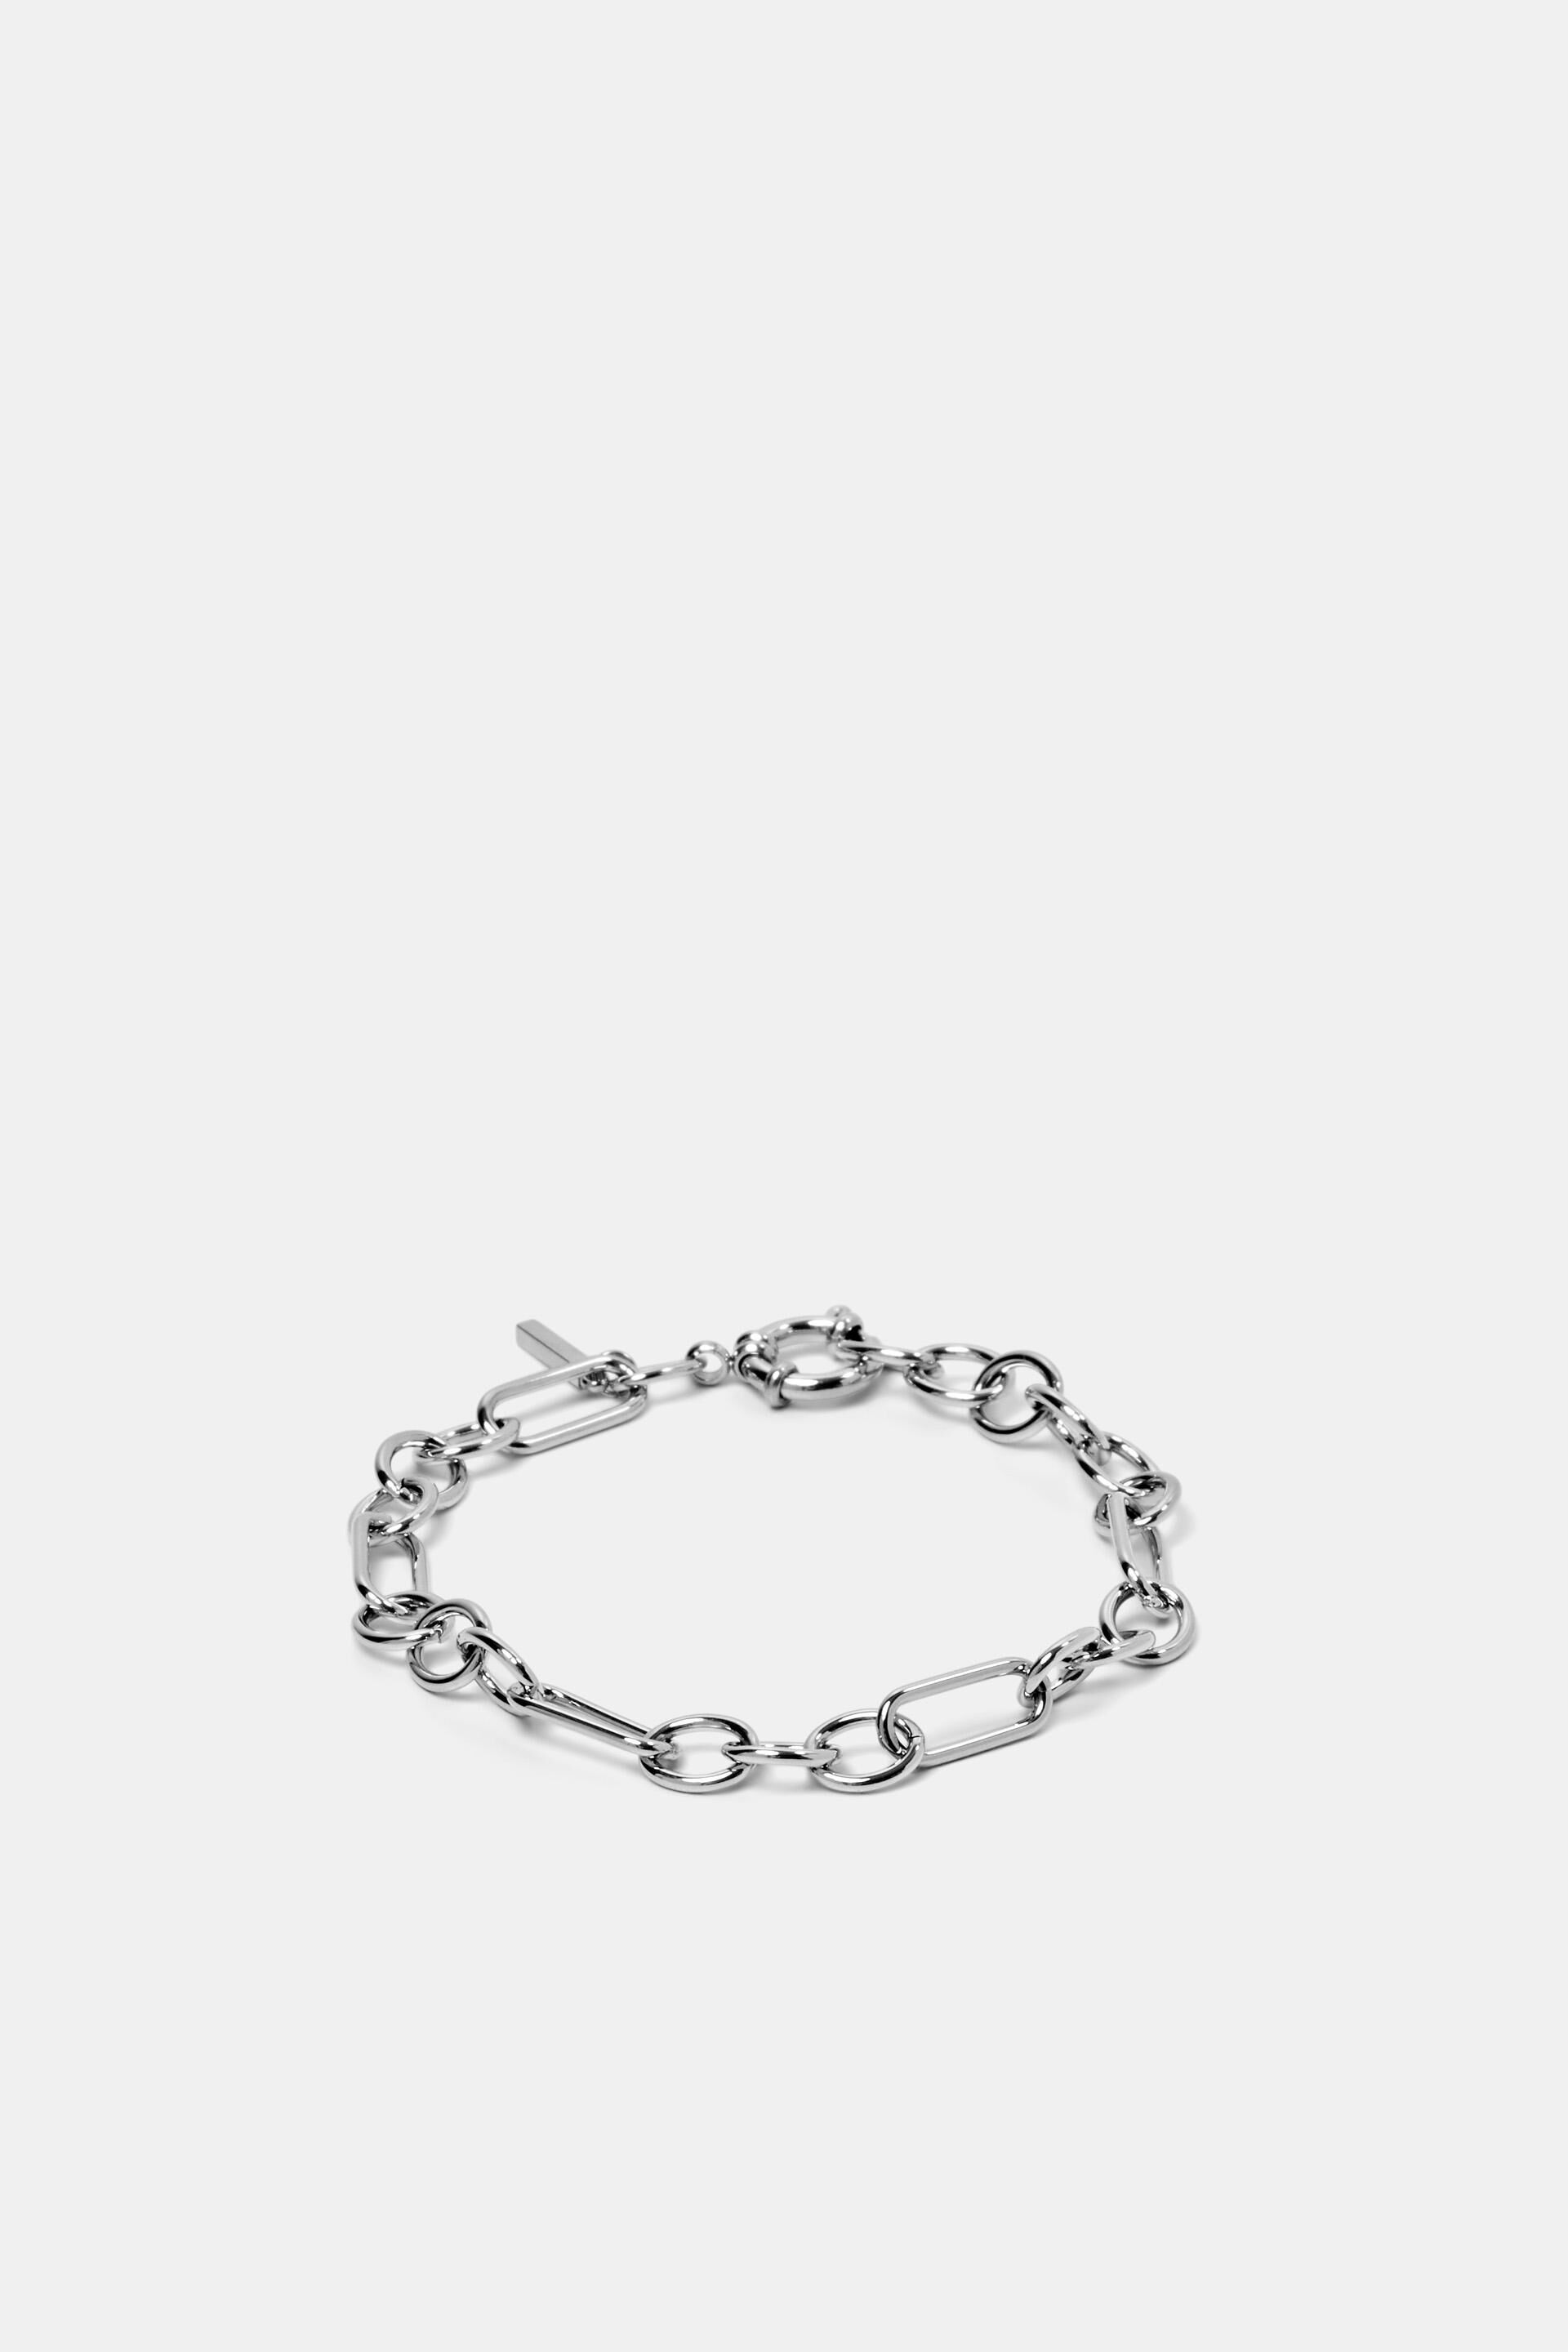 Esprit Online Store Link bracelet, stainless steel